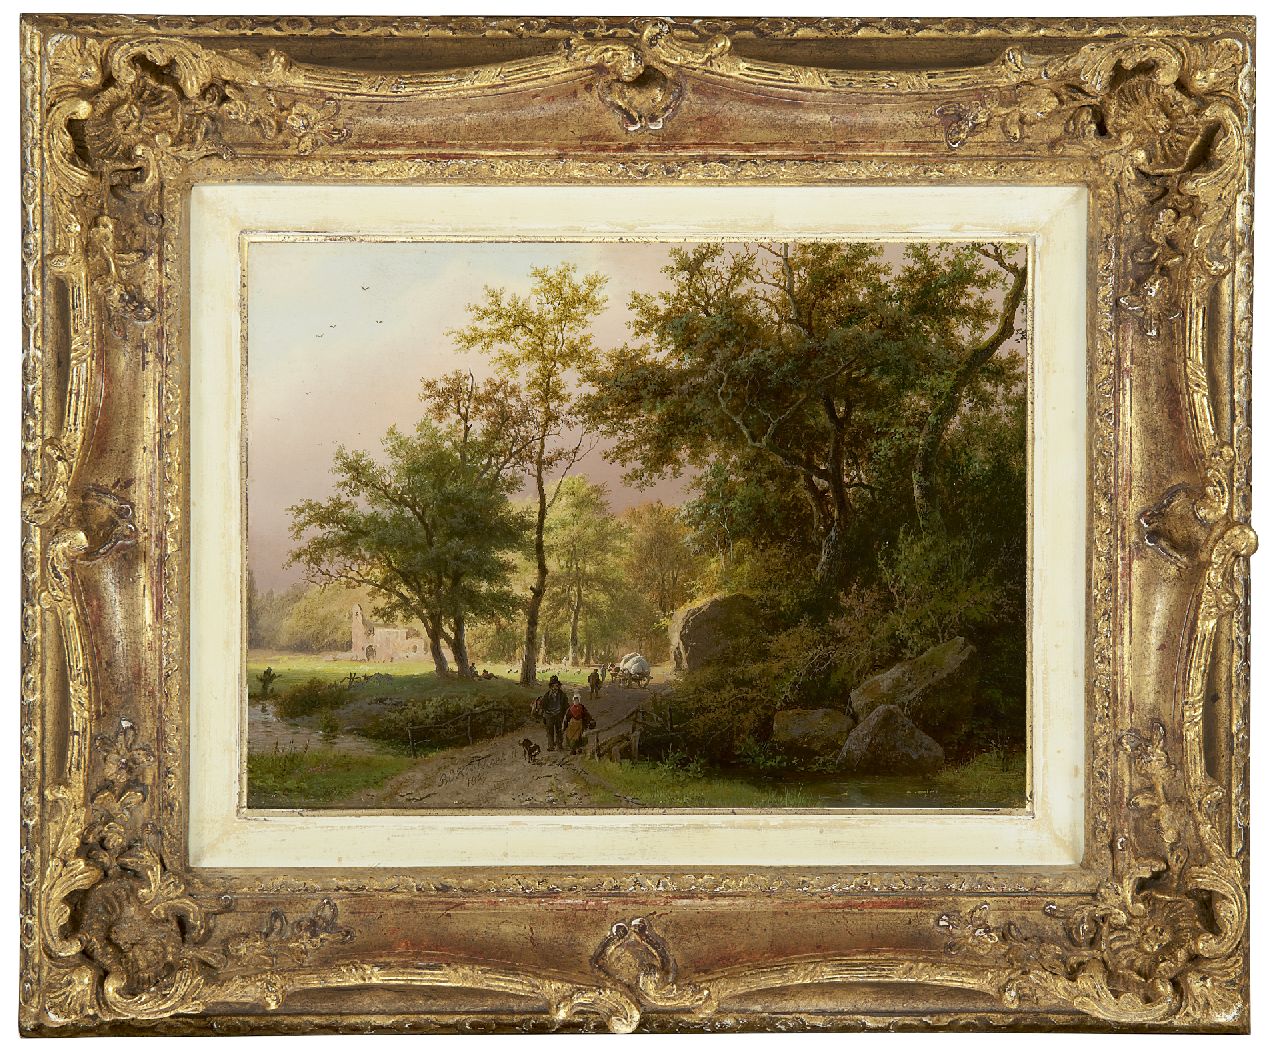 Koekkoek B.C.  | Barend Cornelis Koekkoek, Land folk on an wooded path, oil on panel 17.7 x 24.4 cm, signed l.c. and dated 1849